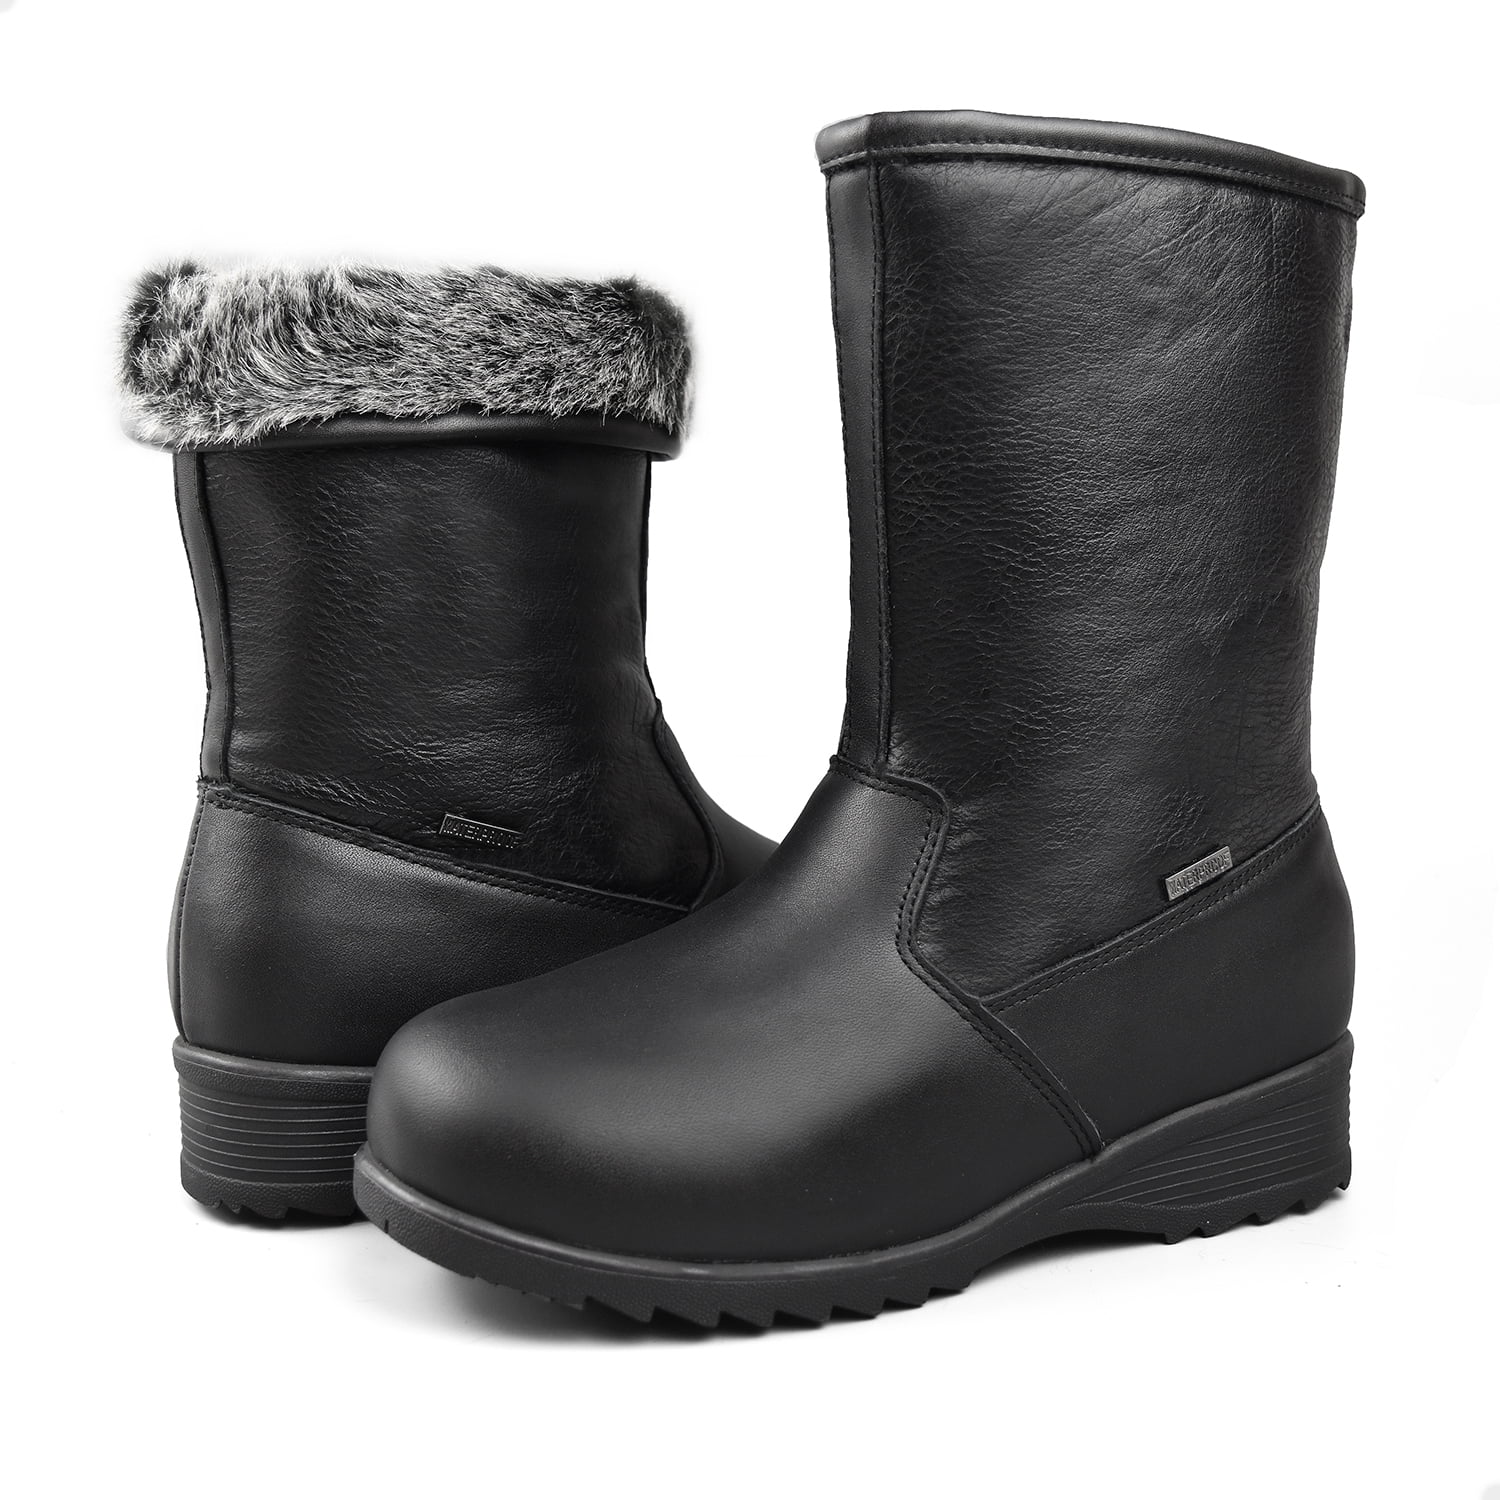 comfy moda women's winter boots